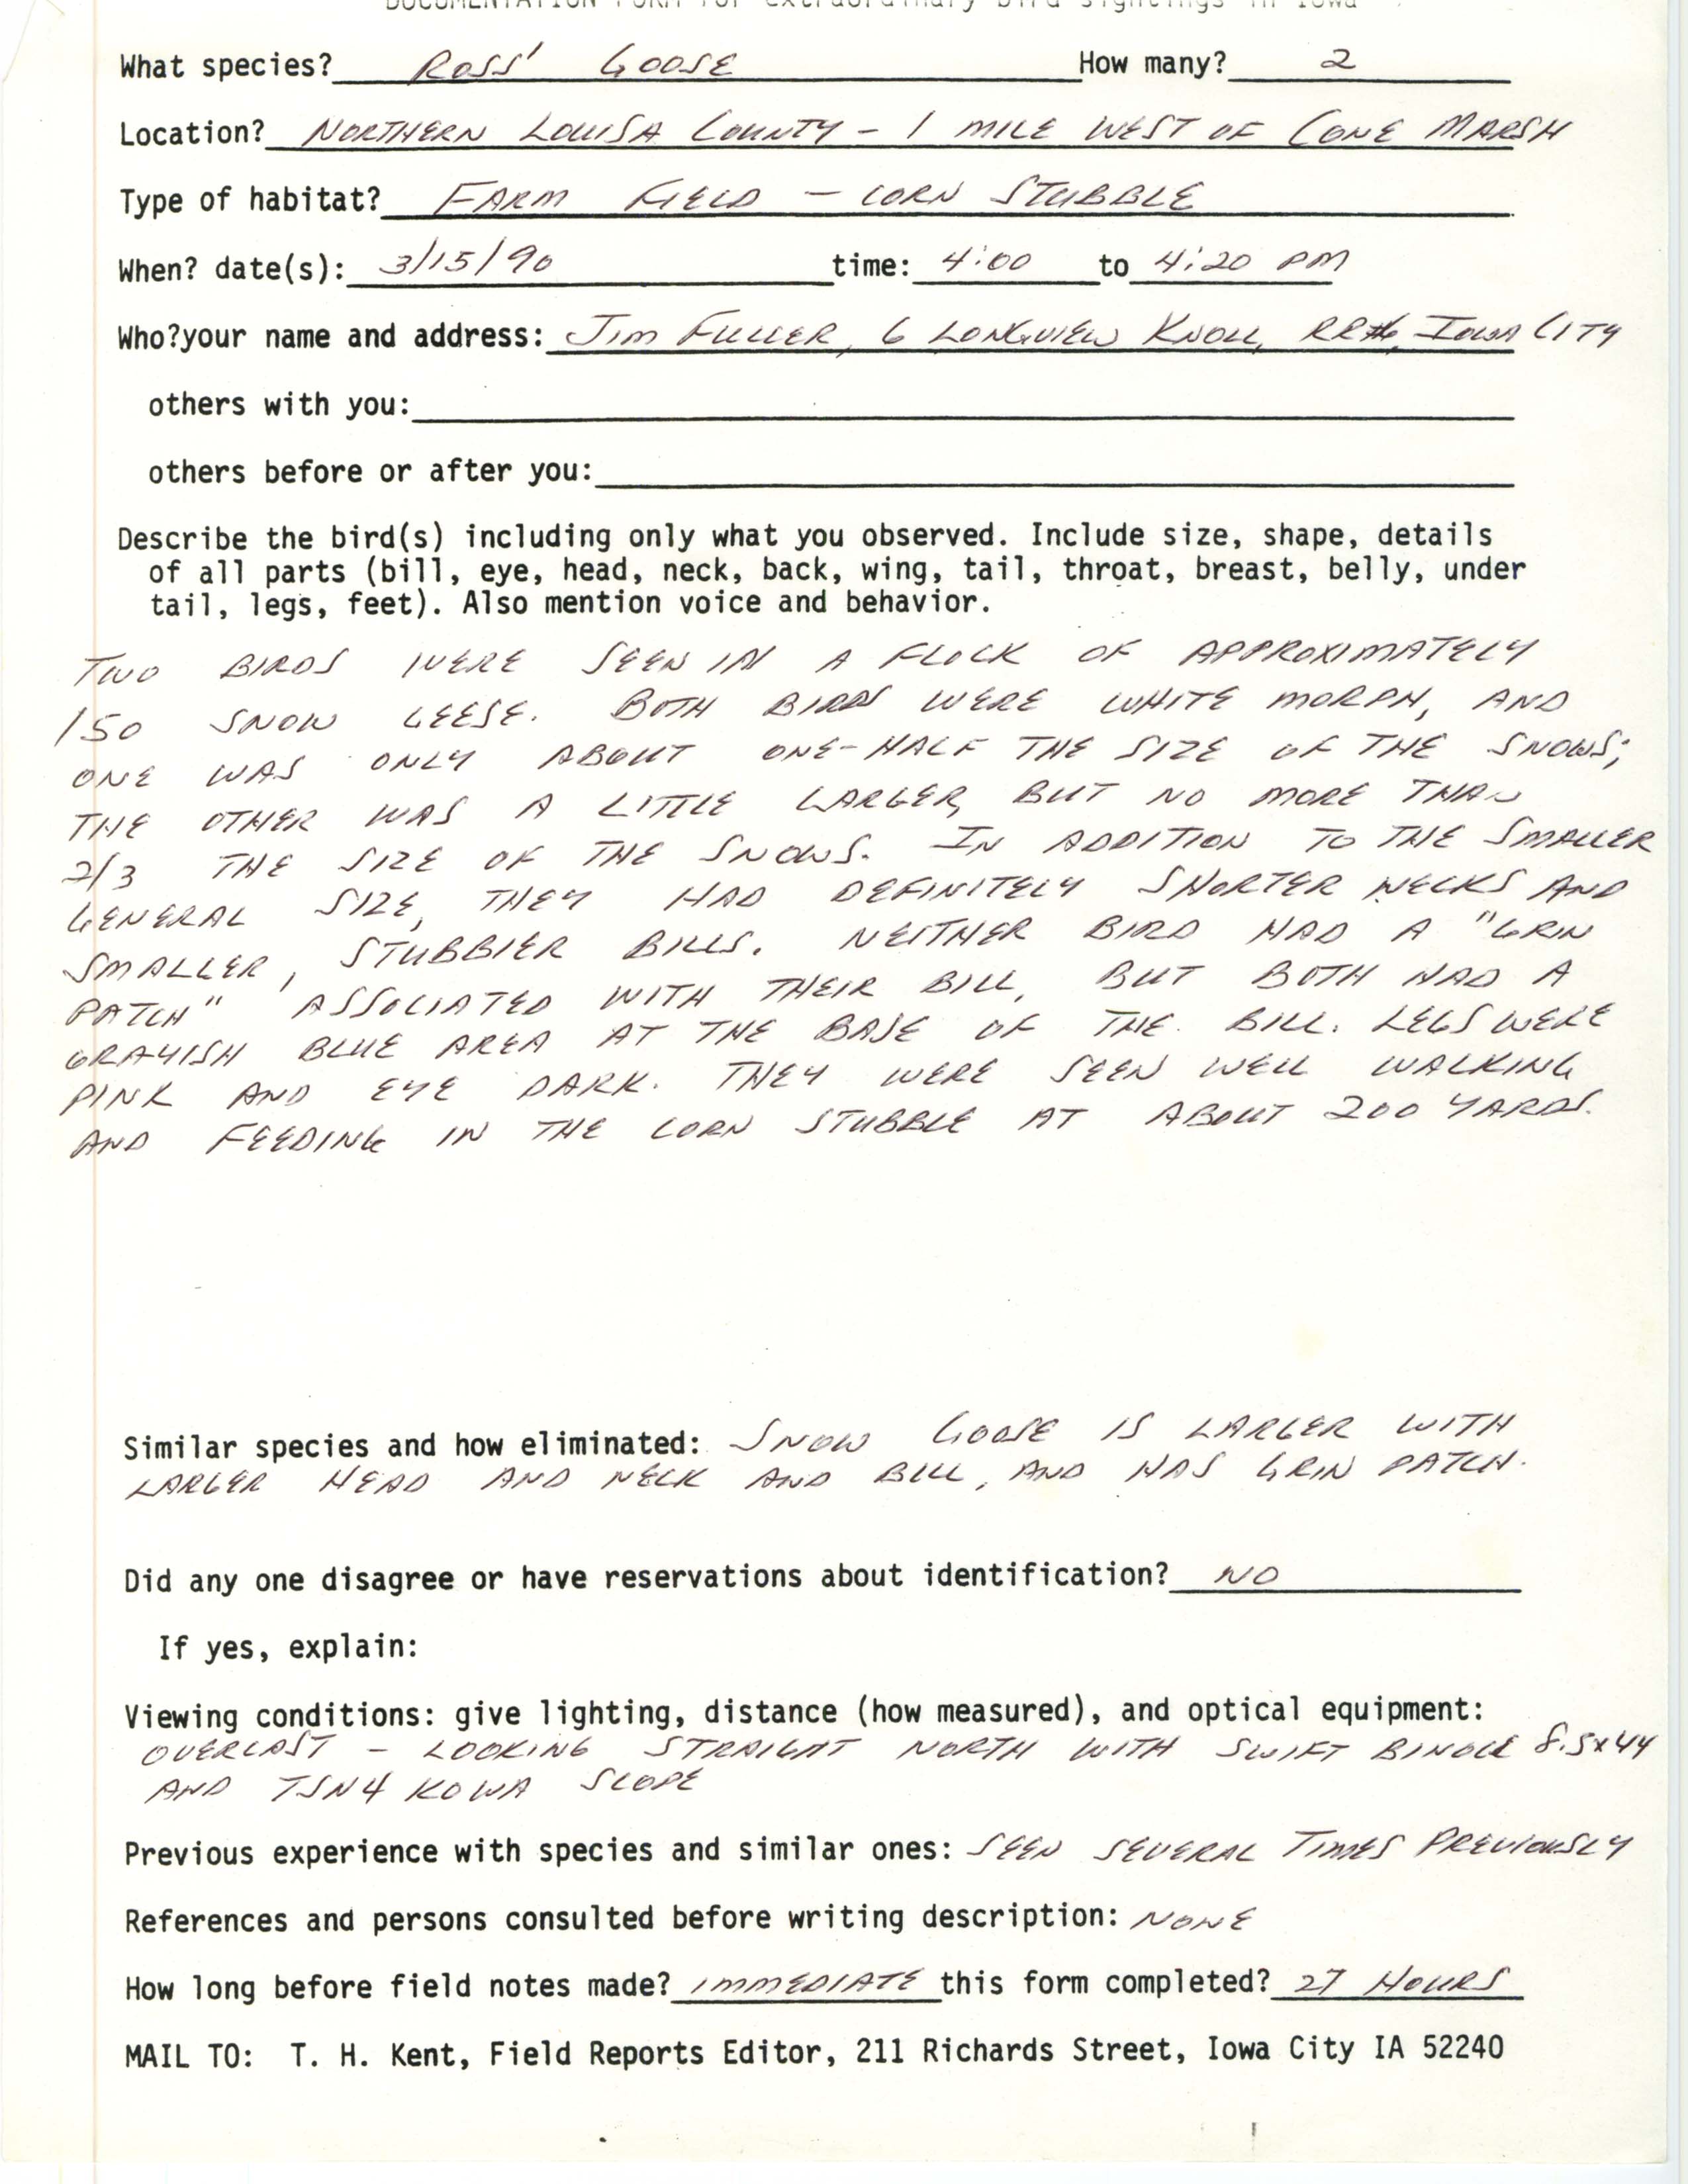 Rare bird documentation form for Ross' Goose near Cone Marsh, 1990